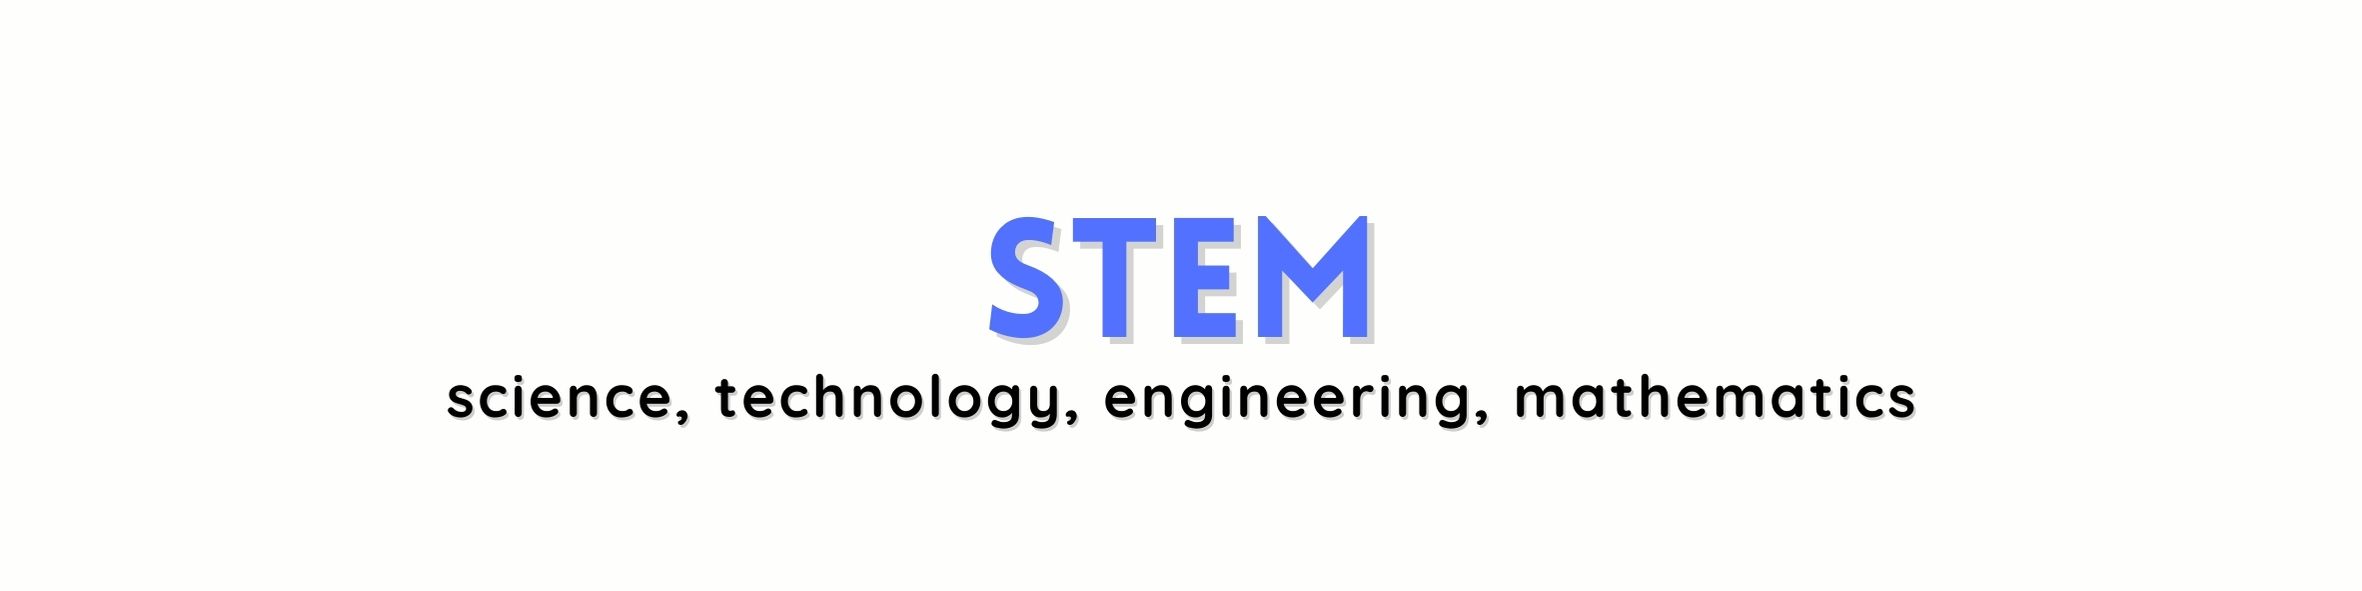 STEM banner